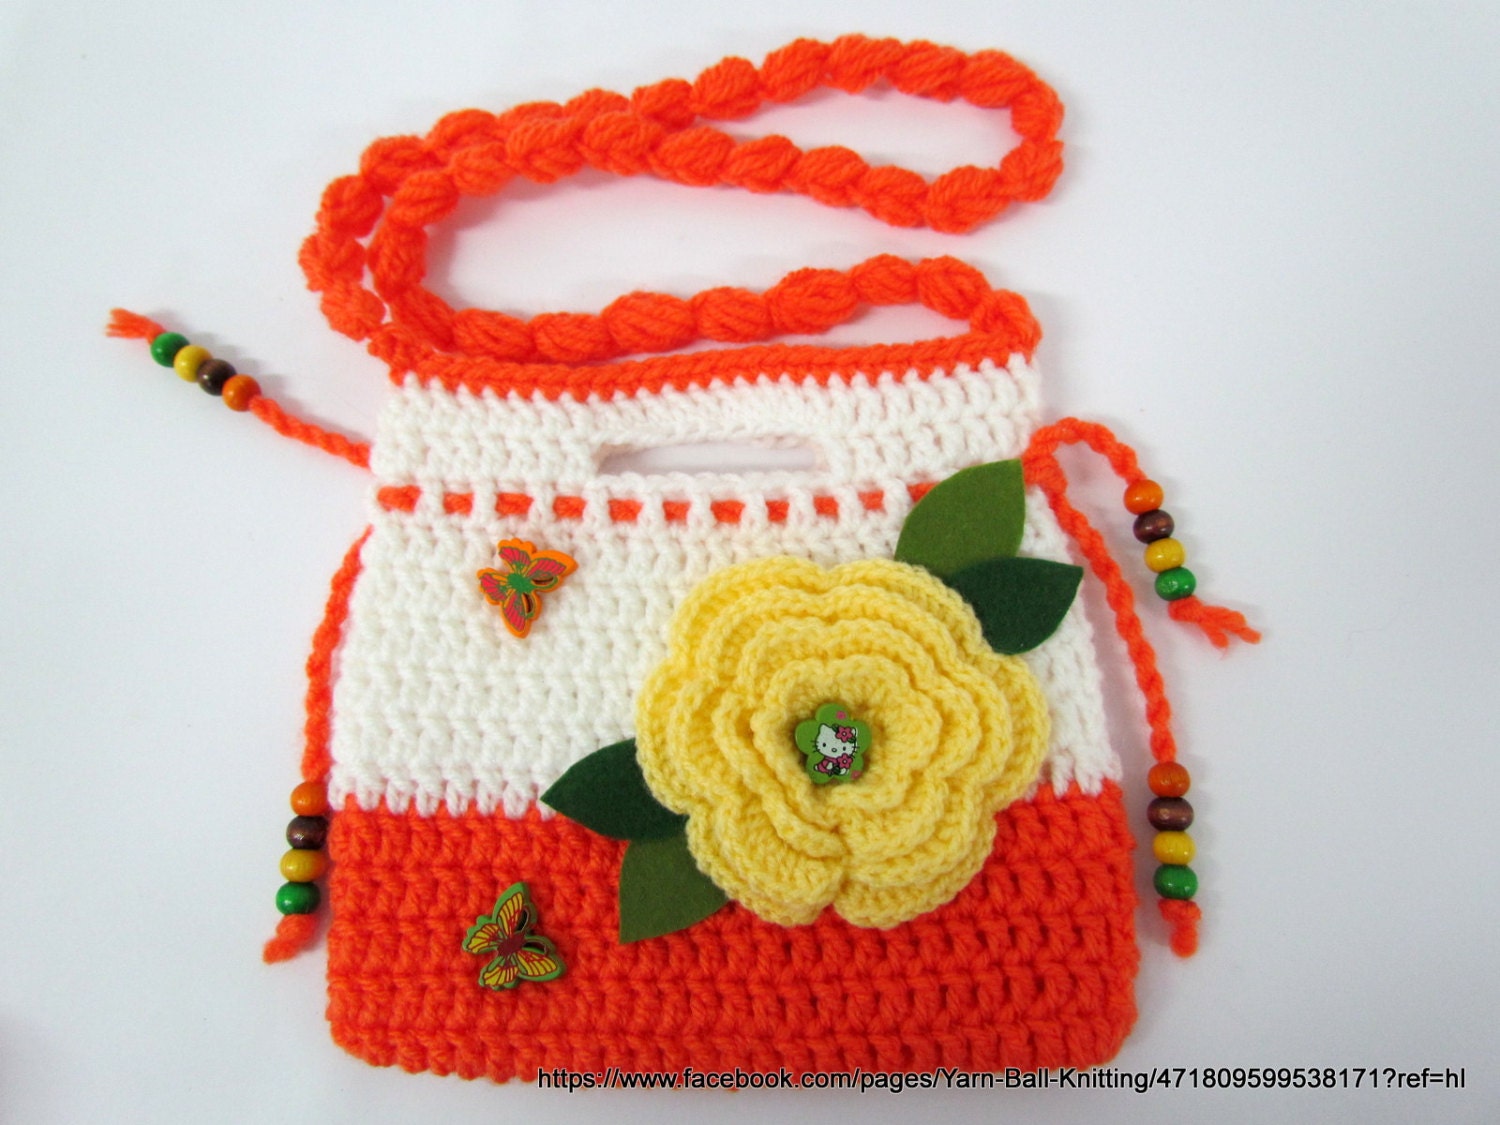 Purse Small Crochet. Small Crochet Purse. Crochet Clutch. - Etsy